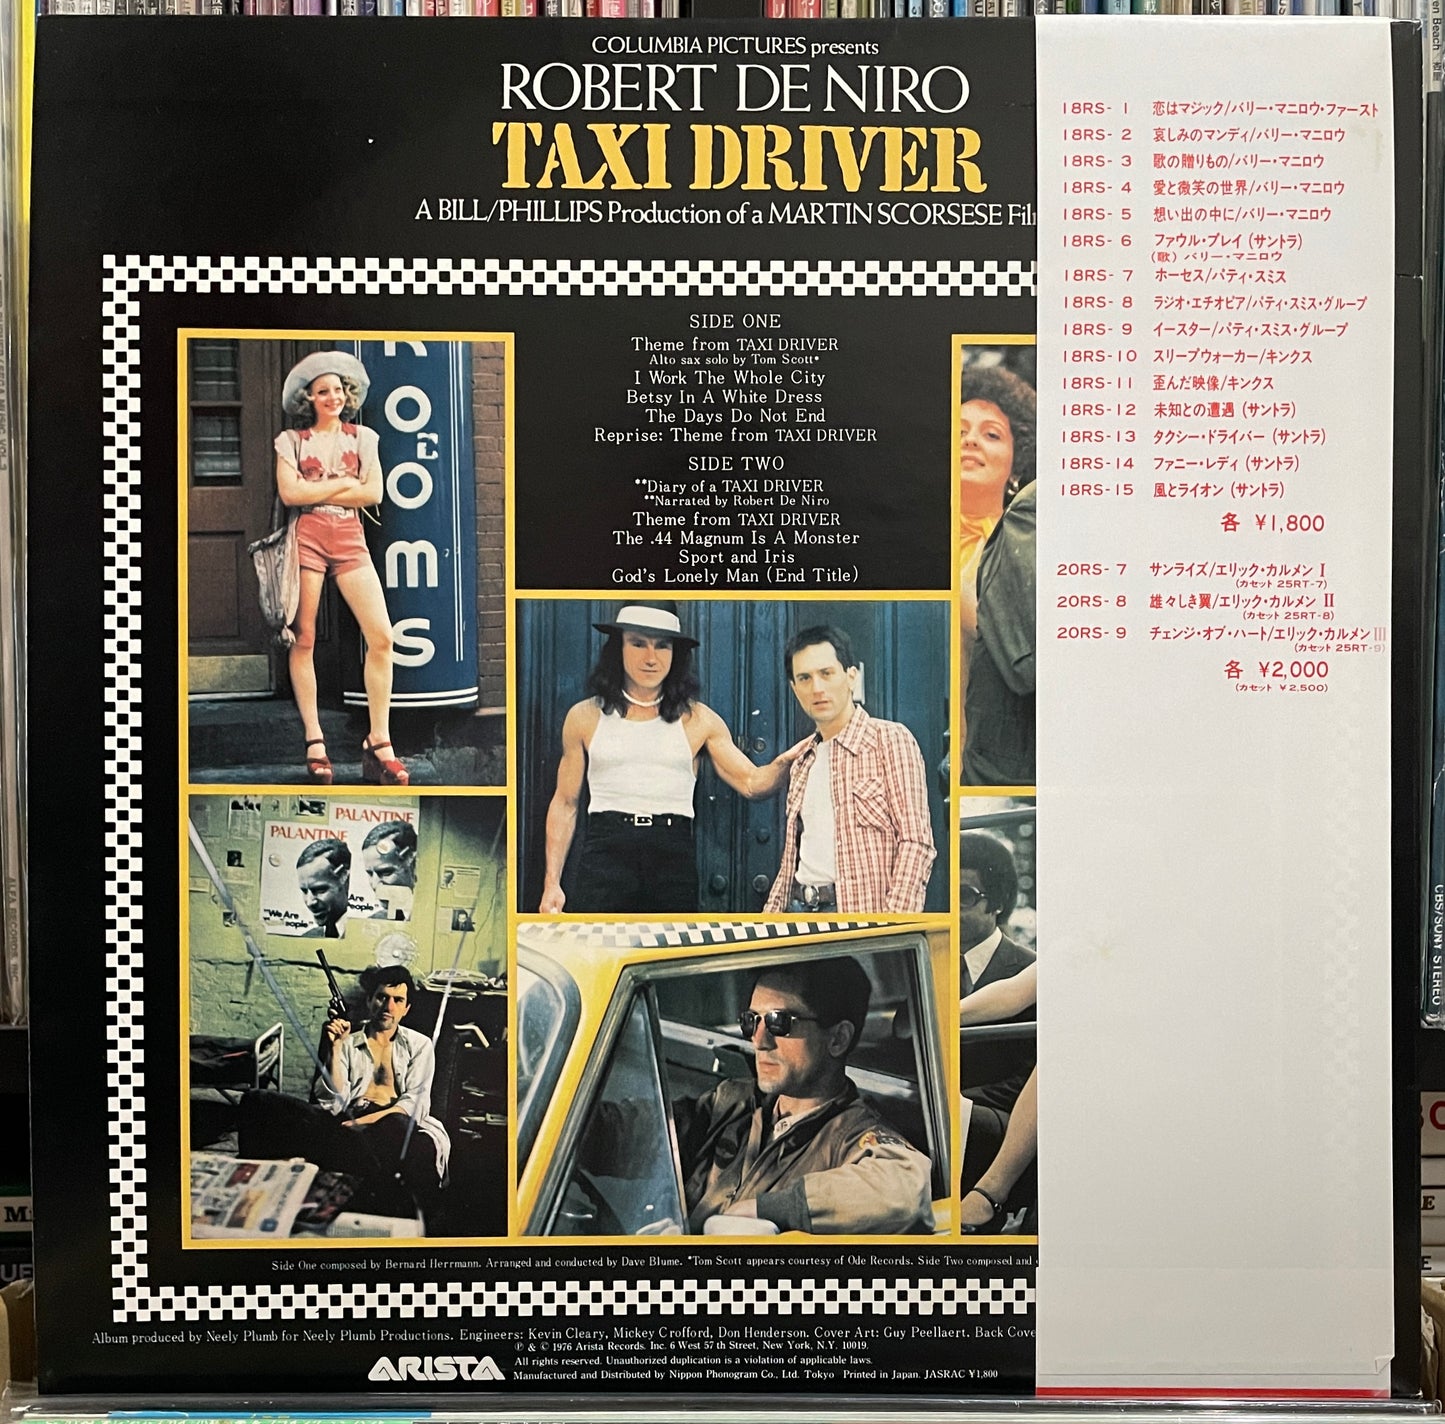 Bernard Herrmann "Taxi Driver" (1980)